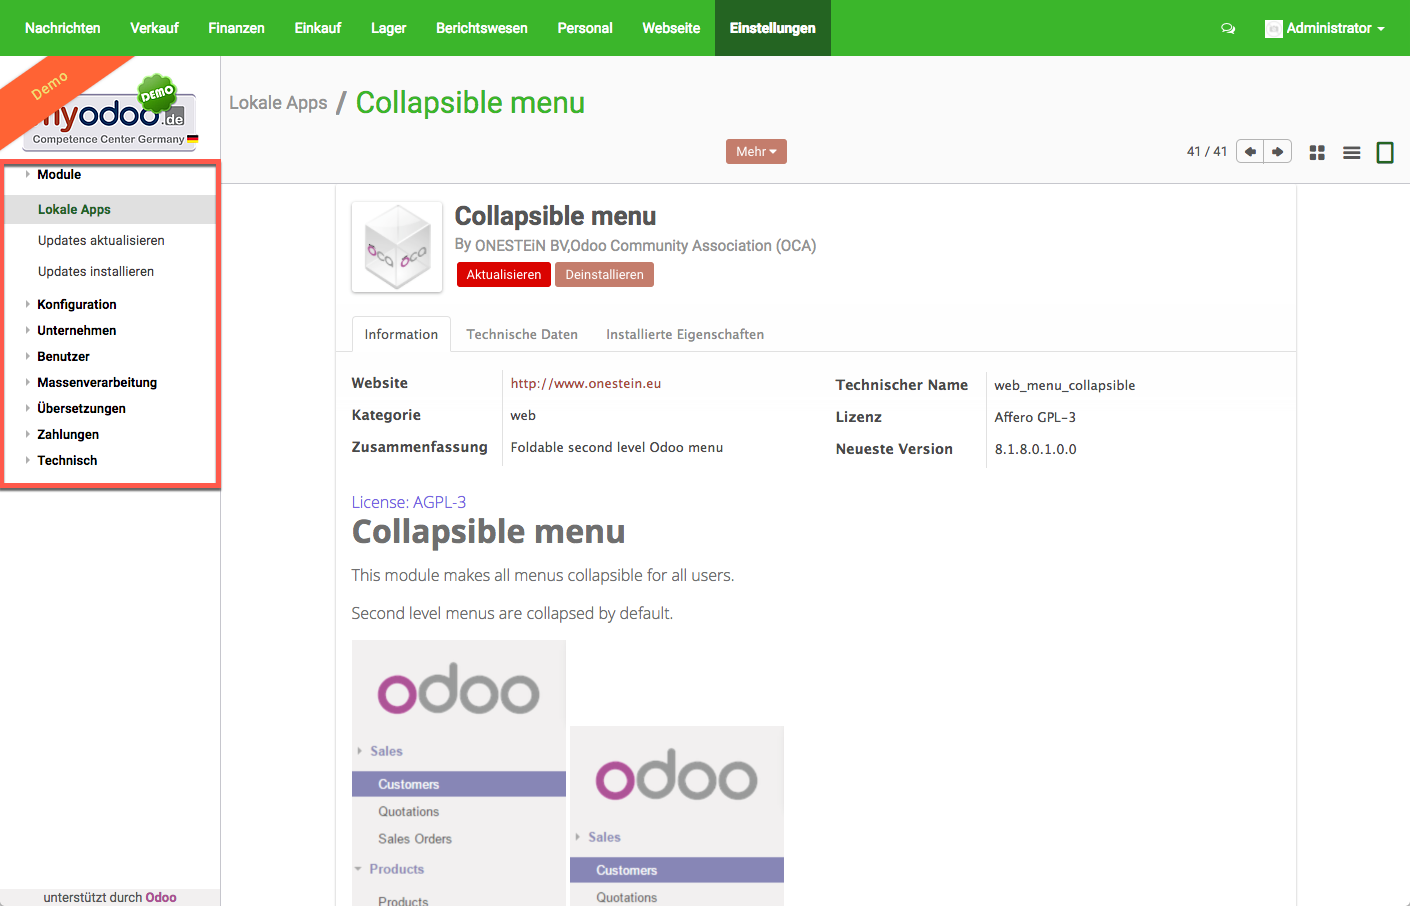 Odoo: Collapsible menu